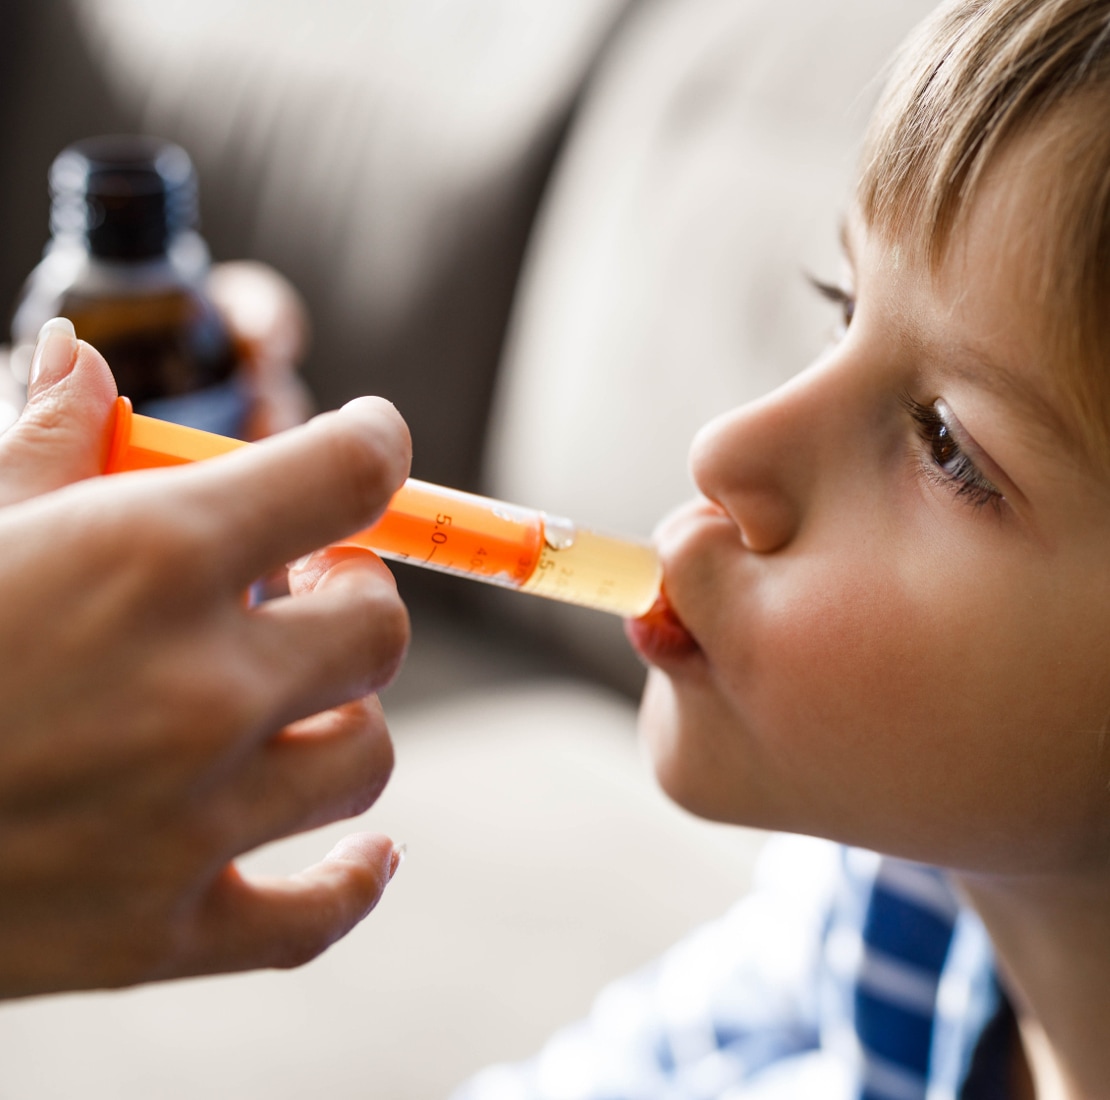 child getting medicine in mouth via syringe